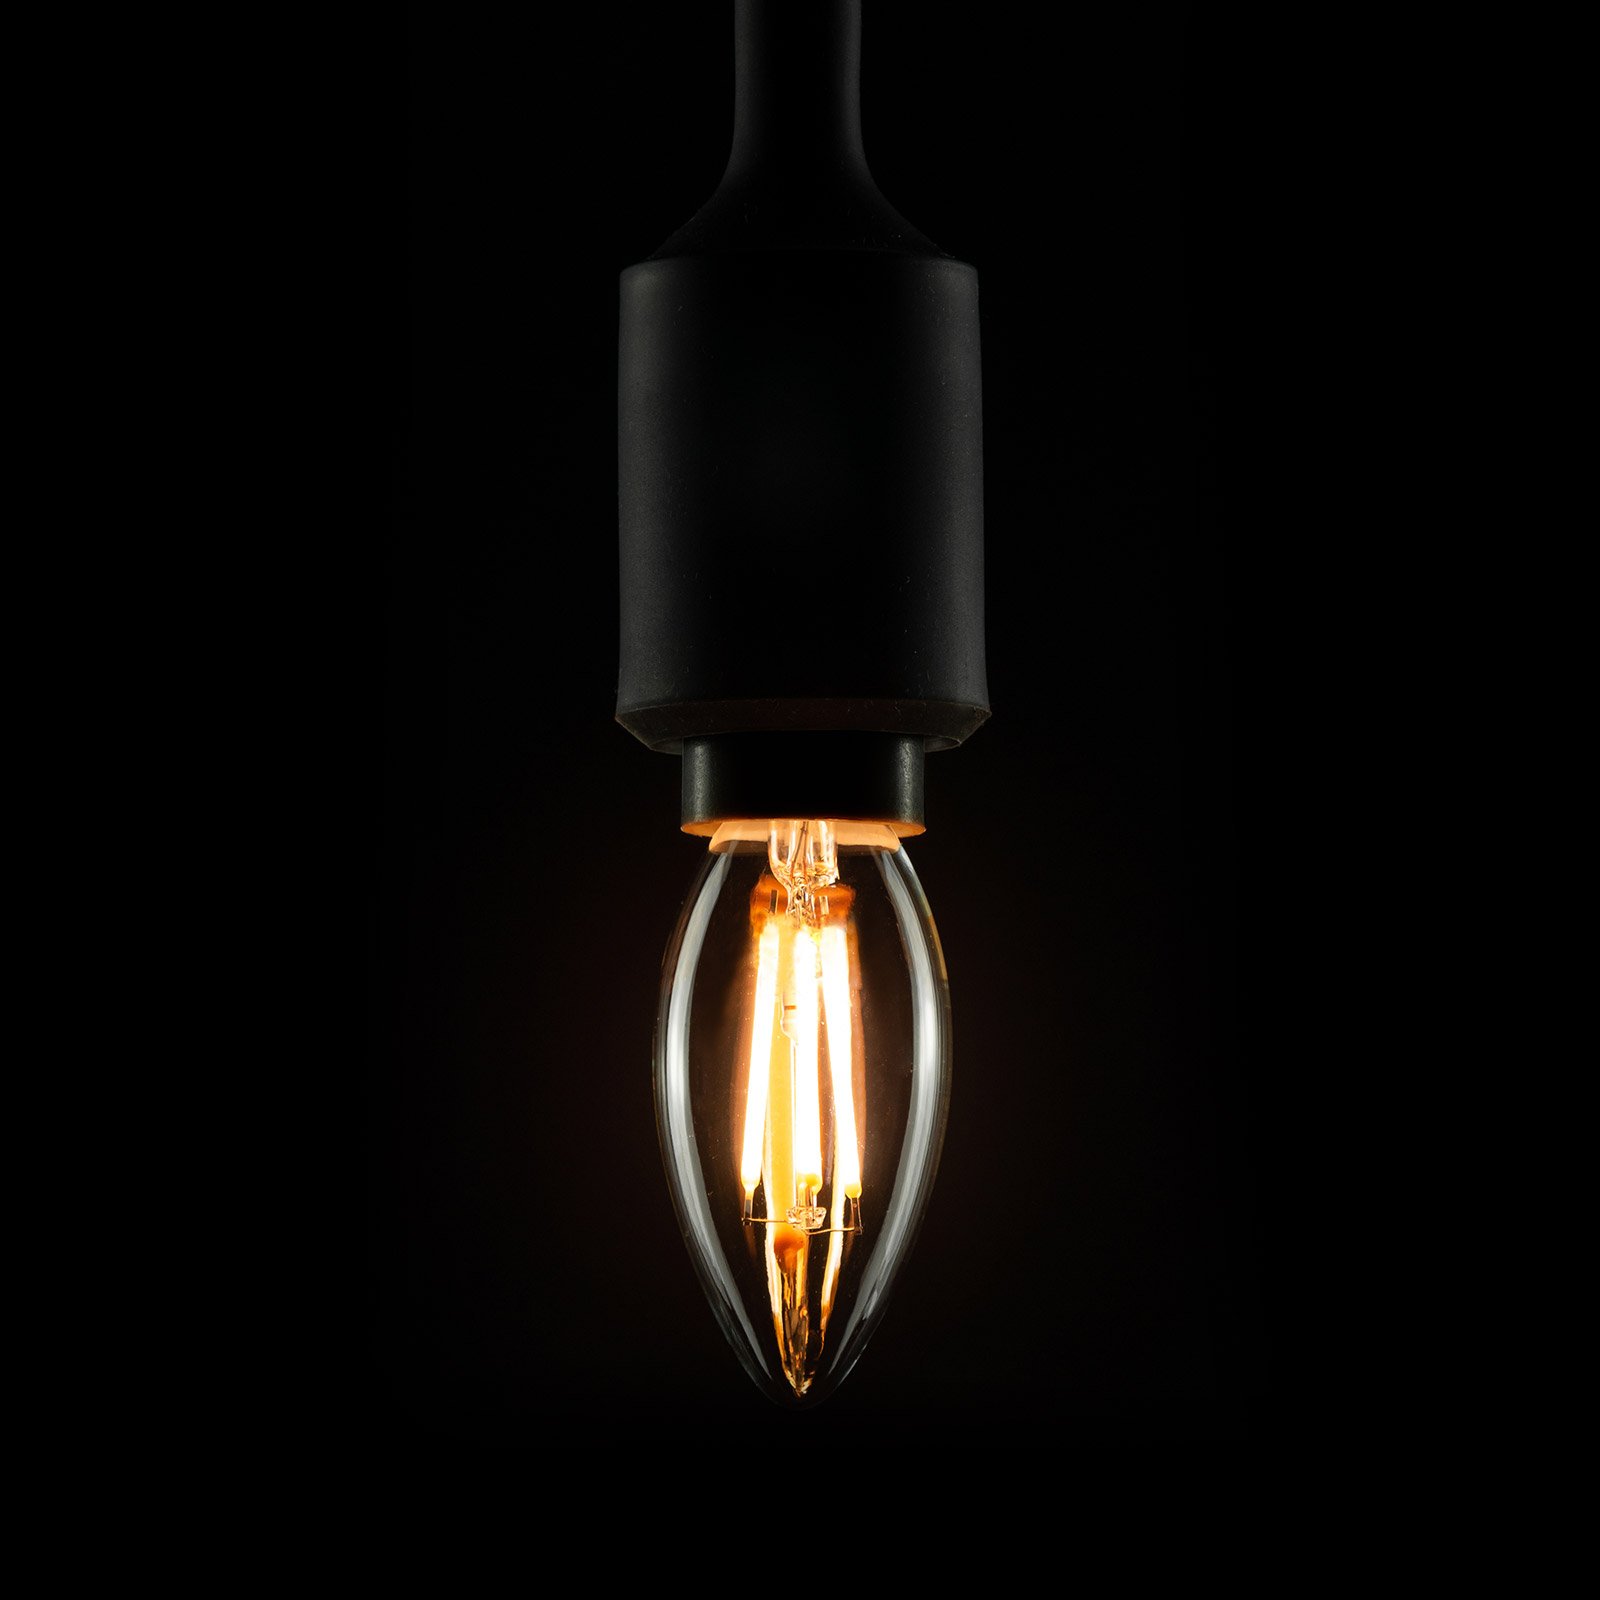 Segula E14 4W LED-Kerzenlampe Ambient, dimmbar